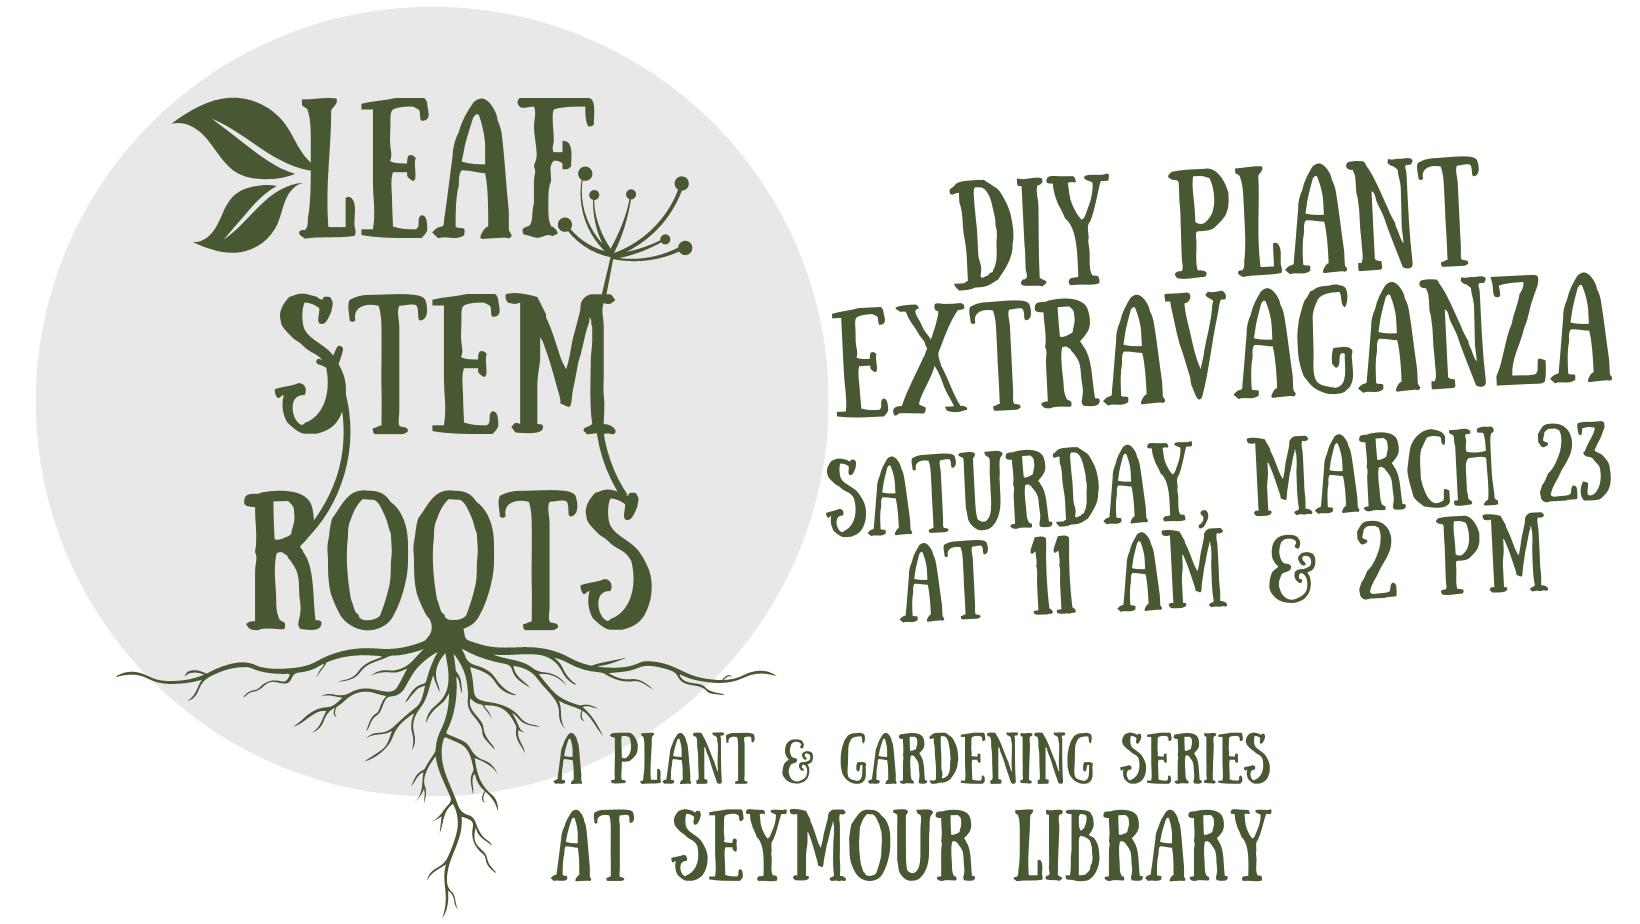 Leaf Stem Roots -- DIY Plant Extravaganza